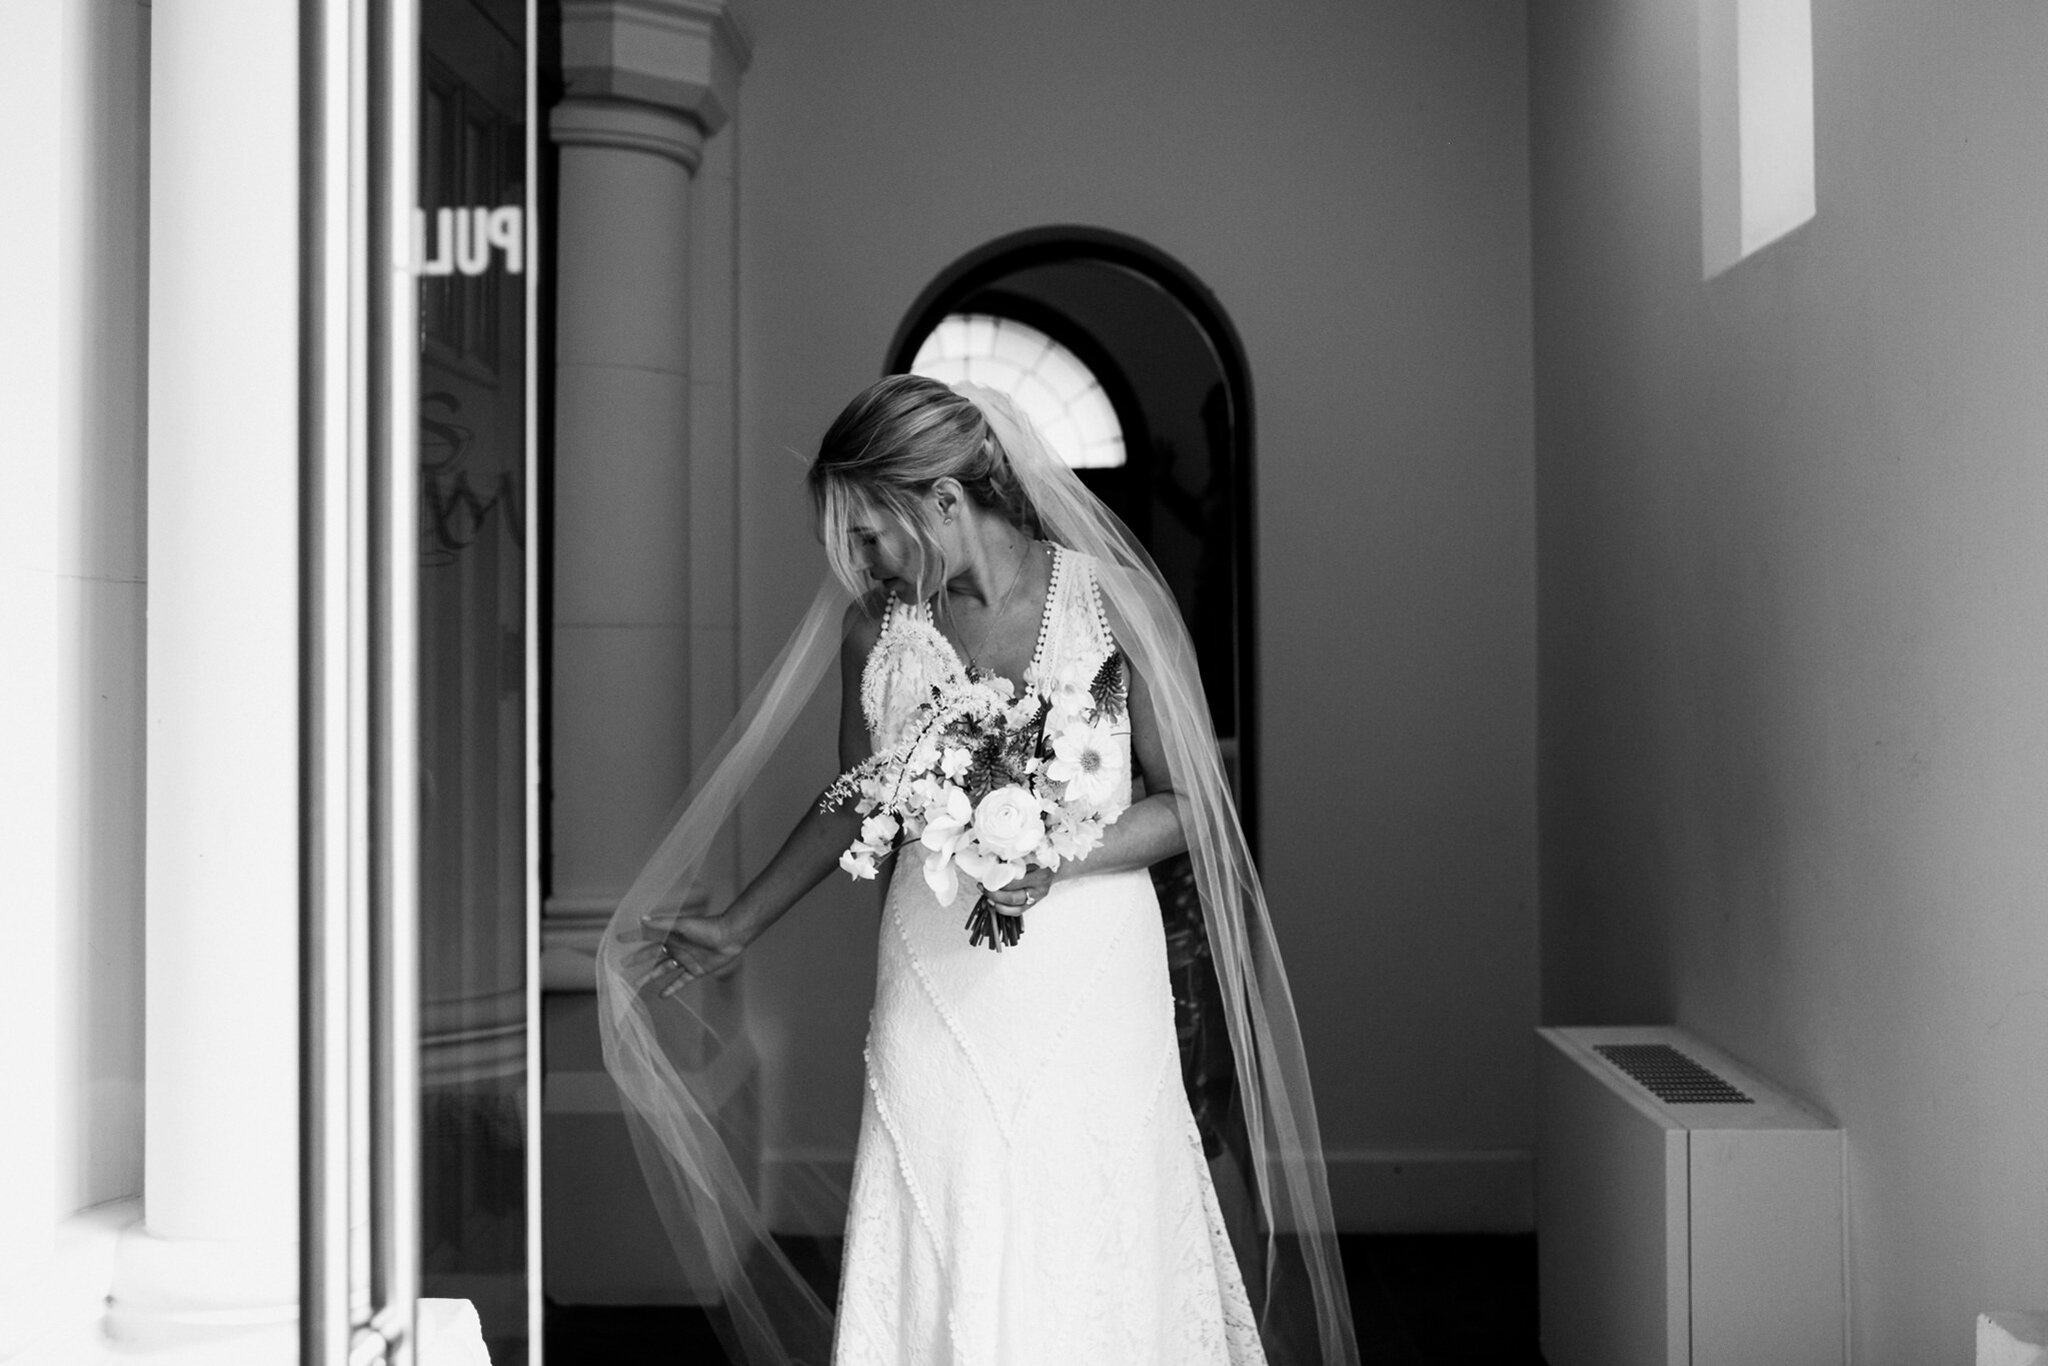 919-bride-bridal-portrait-black-white-wedding-ceremony-annex-church-wedding-toronto-photos.jpg